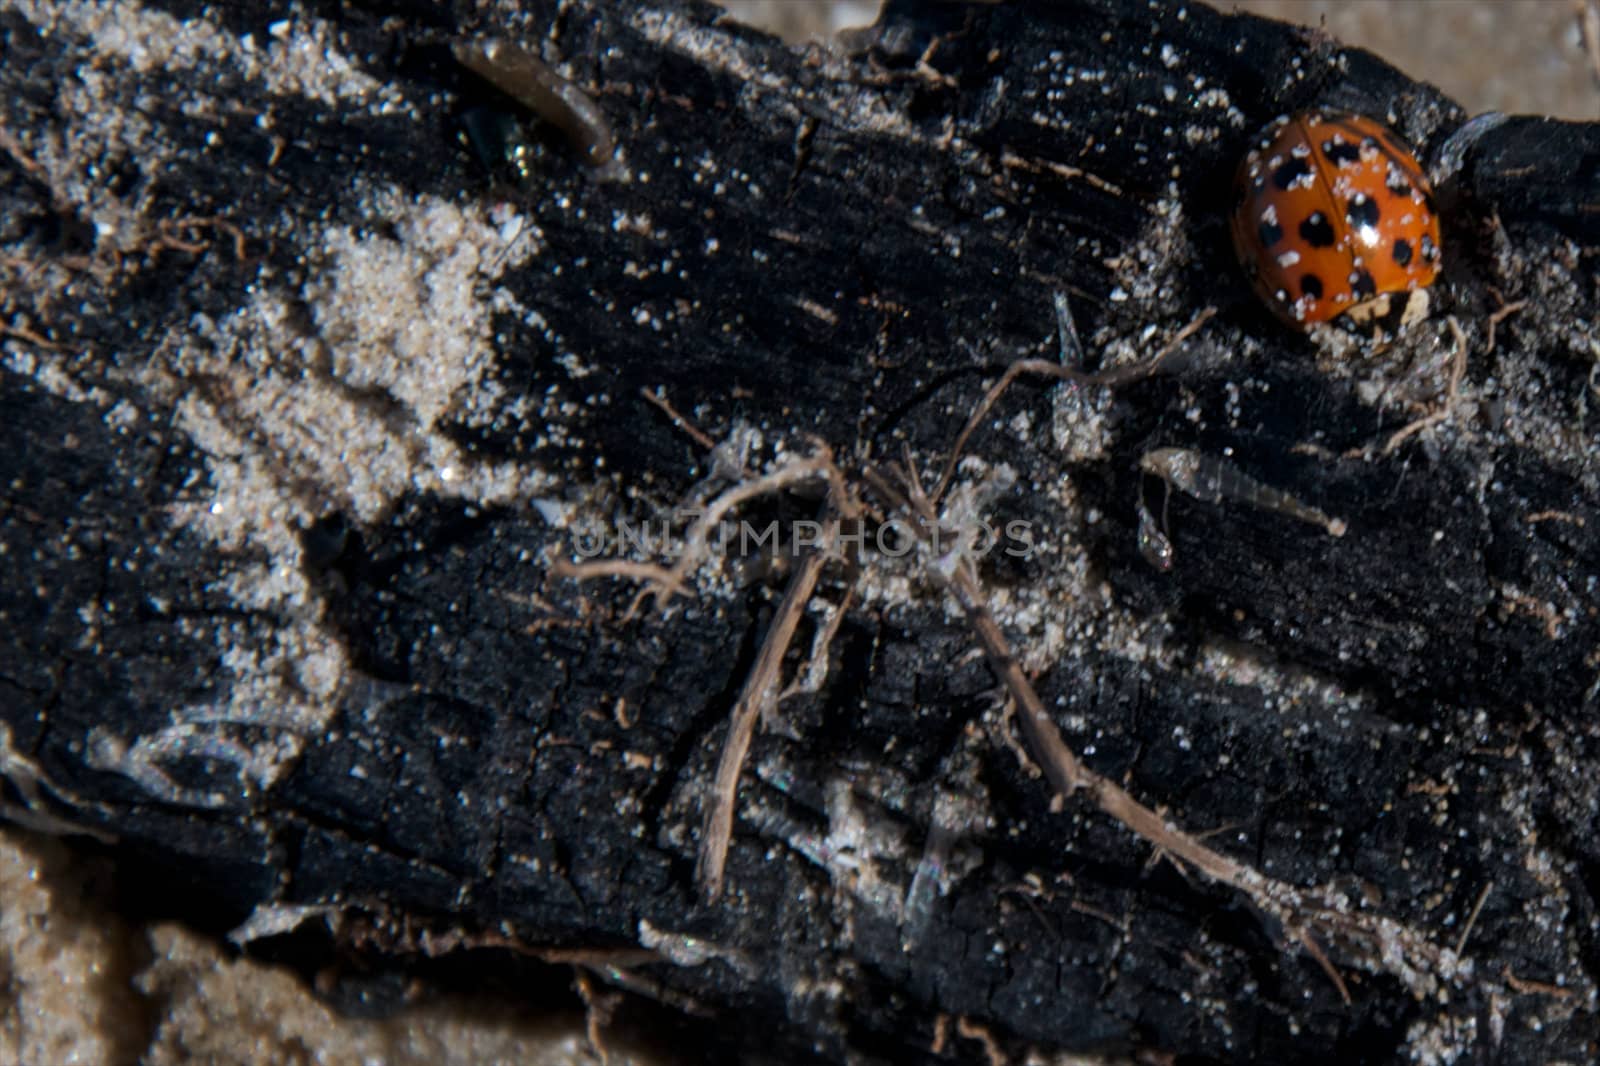 A ladybug rests on a piece of firewood.







A ladygu